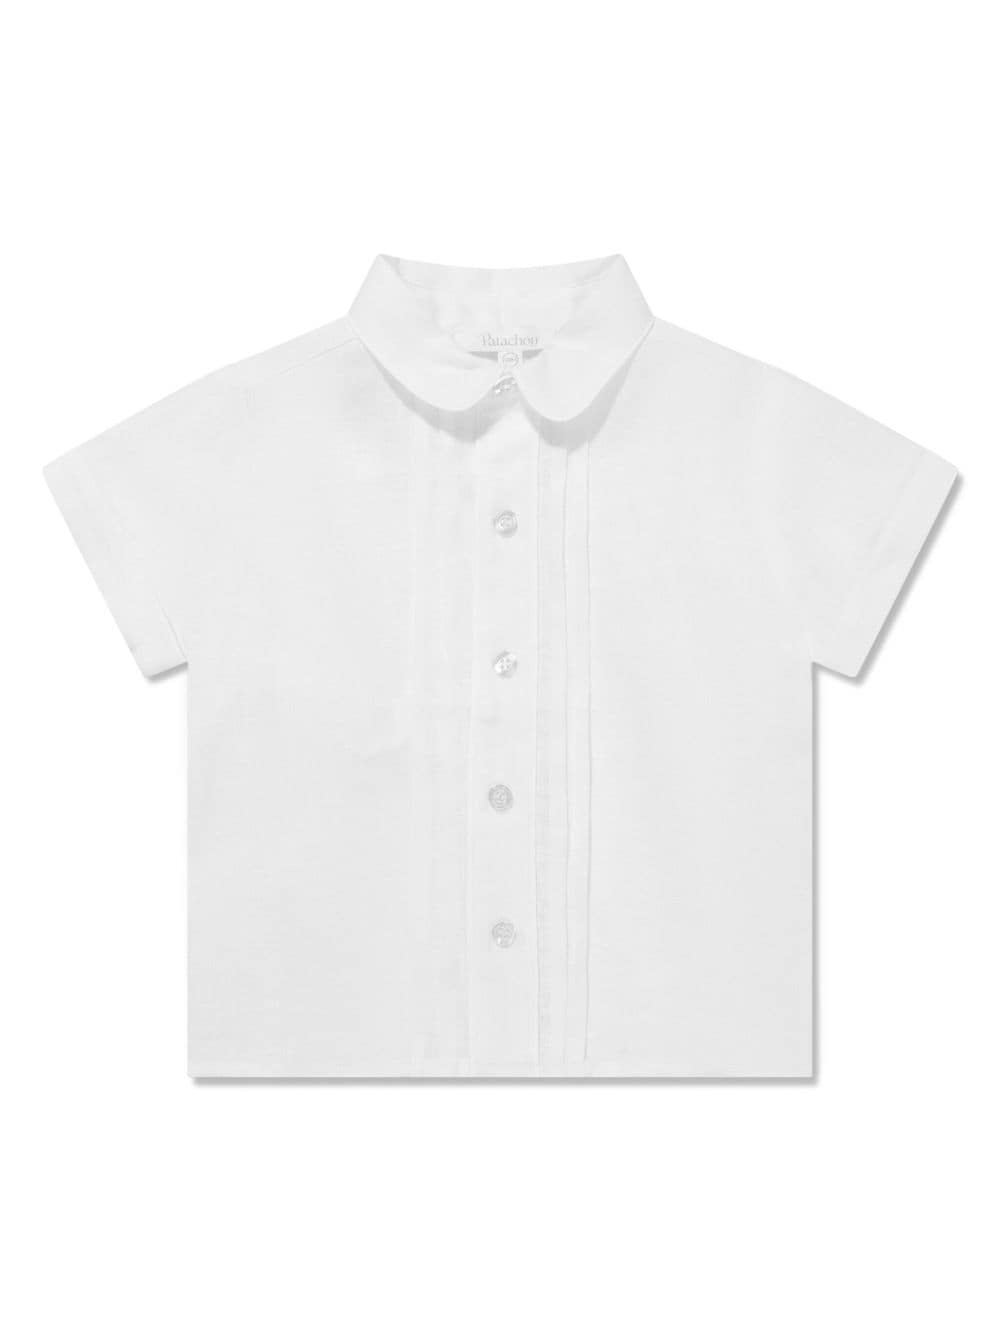 Patachou linen short-sleeve shirt - White